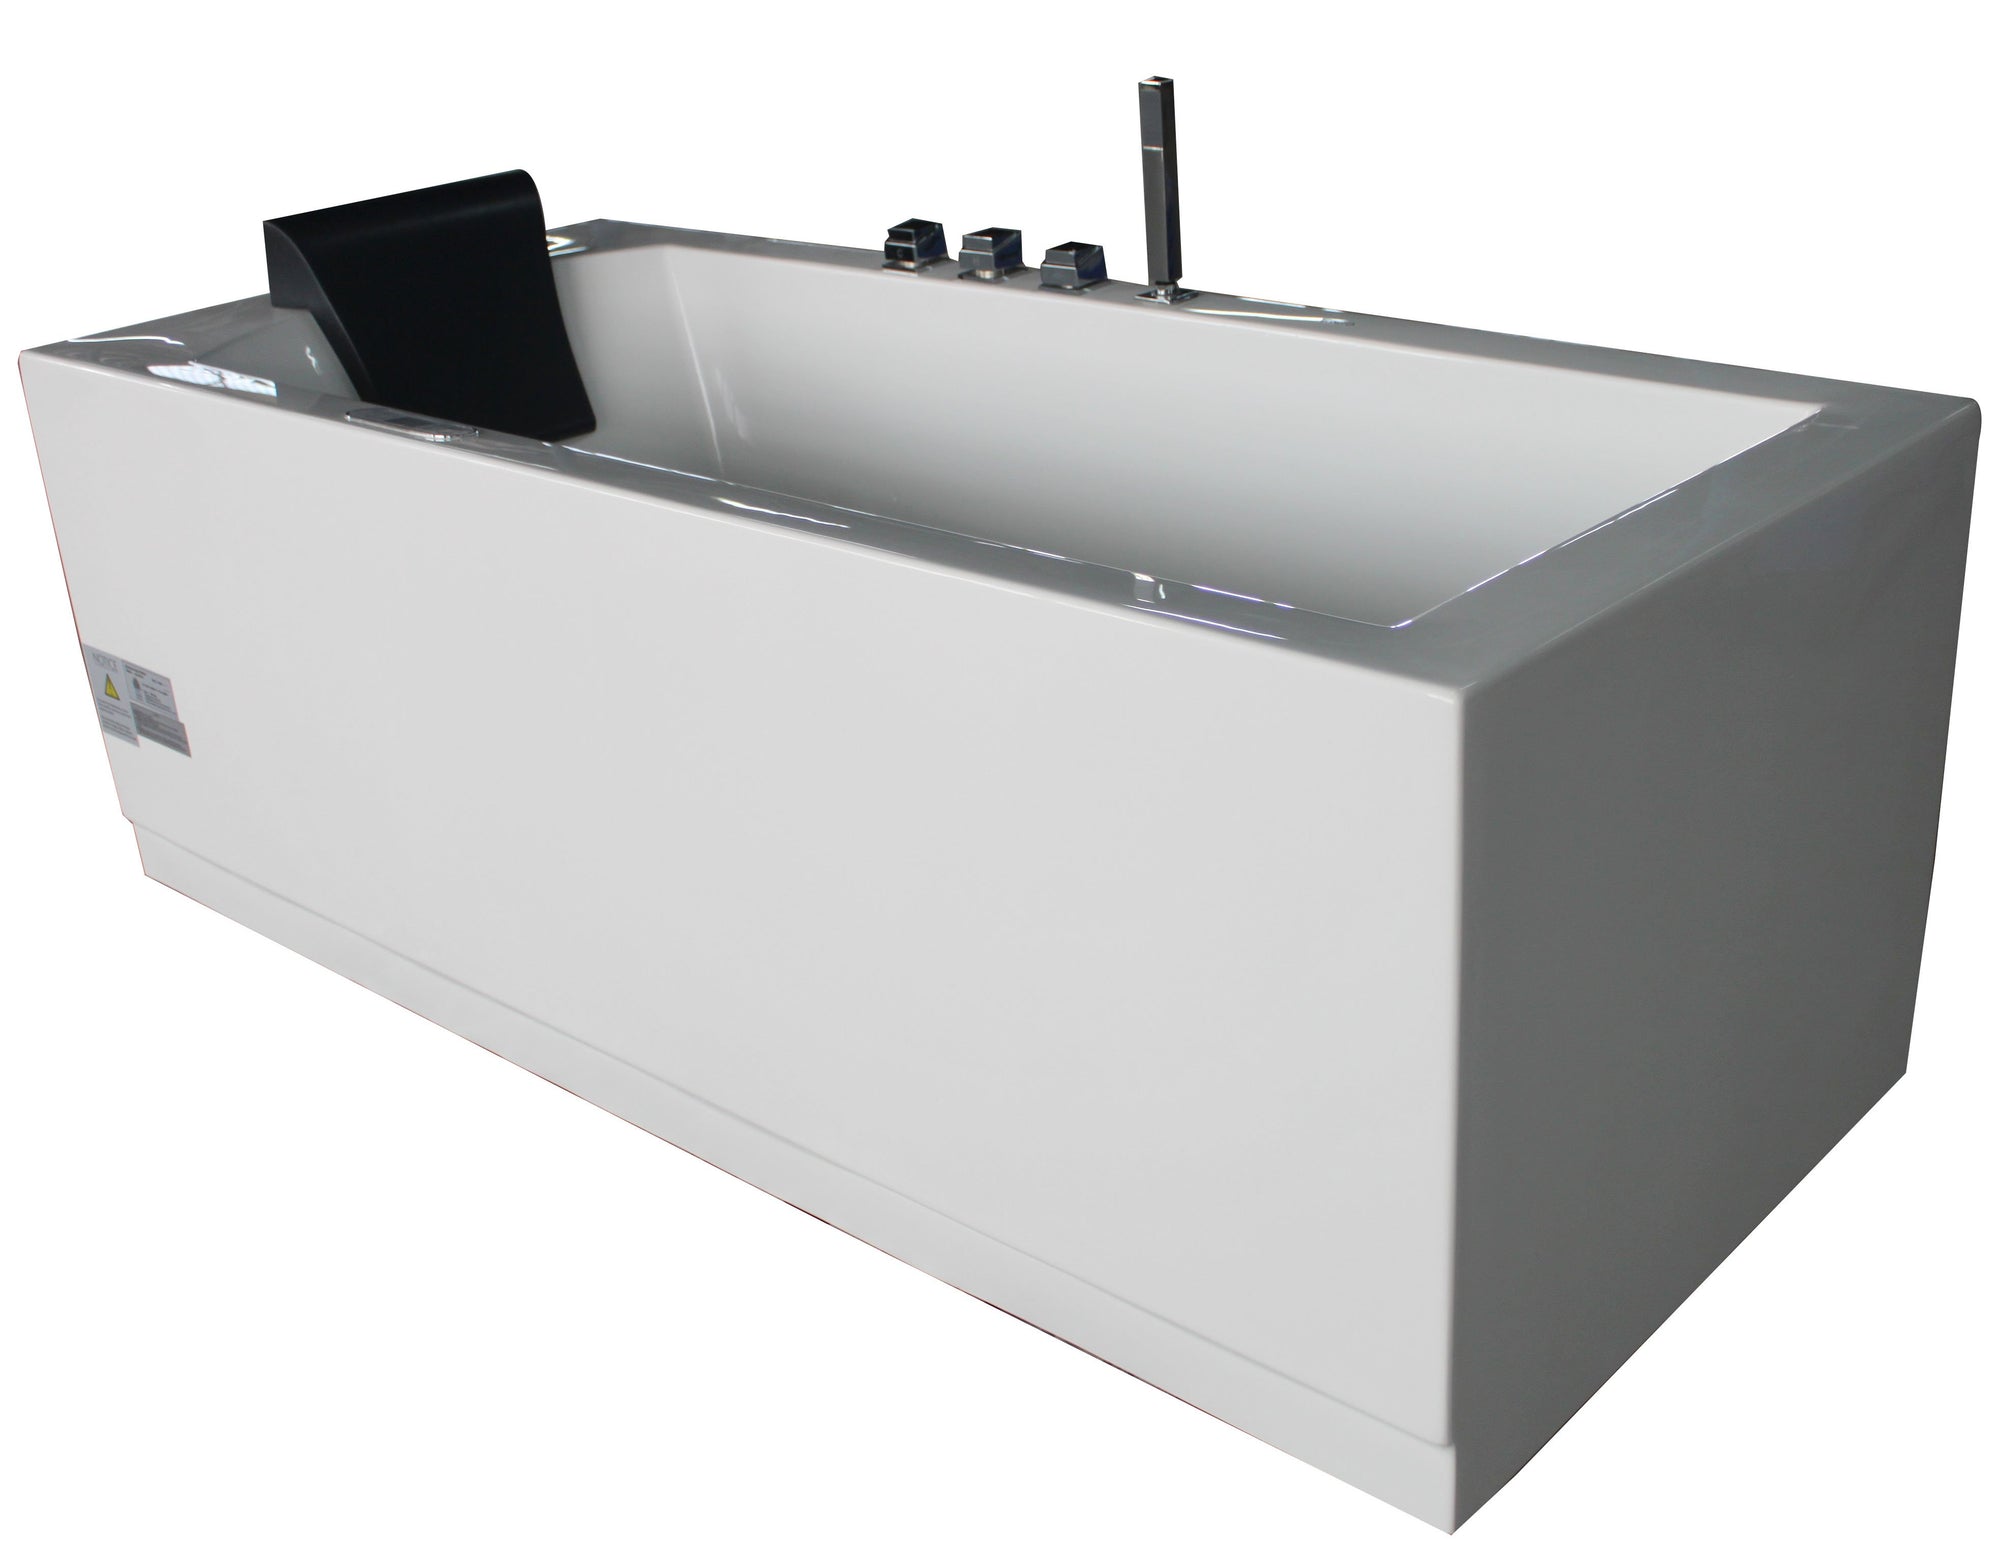 https://cdn.shopify.com/s/files/1/0627/3513/products/eago-whirlpool-tubs-eago-am154etl-r5-5-ft-acrylic-white-rectangular-whirlpool-bathtub-w-fixtures-14520356405299_2000x.jpg?v=1595980778